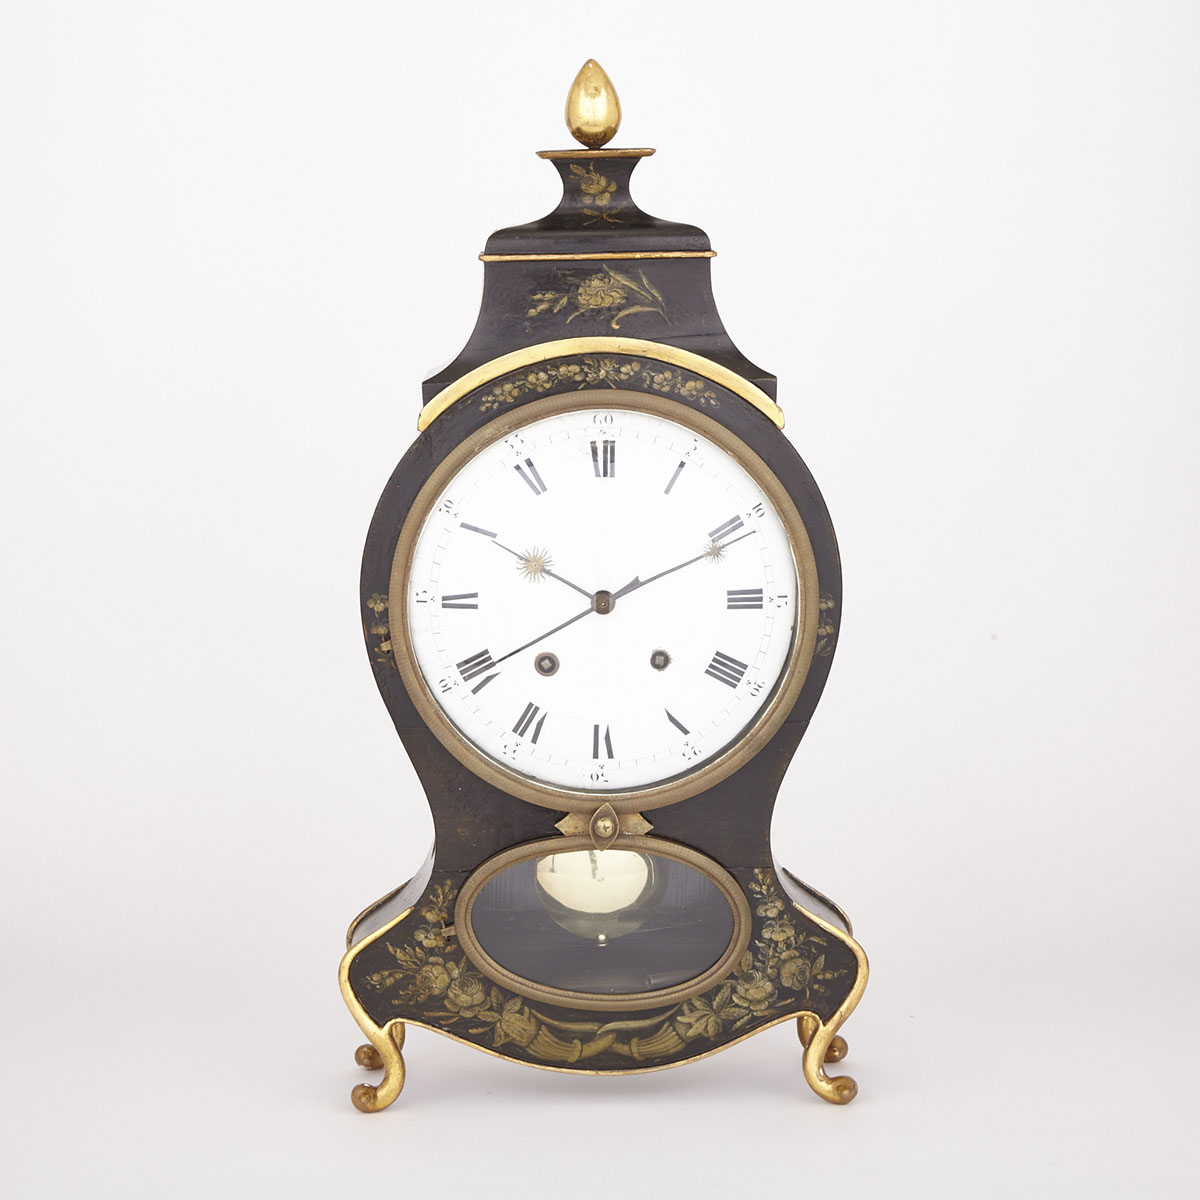 Swiss Grande Sonnerie Bracket Clock with Alarm, Neuchatel, early 19th century